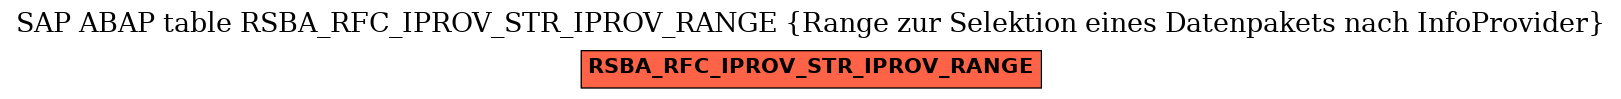 E-R Diagram for table RSBA_RFC_IPROV_STR_IPROV_RANGE (Range zur Selektion eines Datenpakets nach InfoProvider)